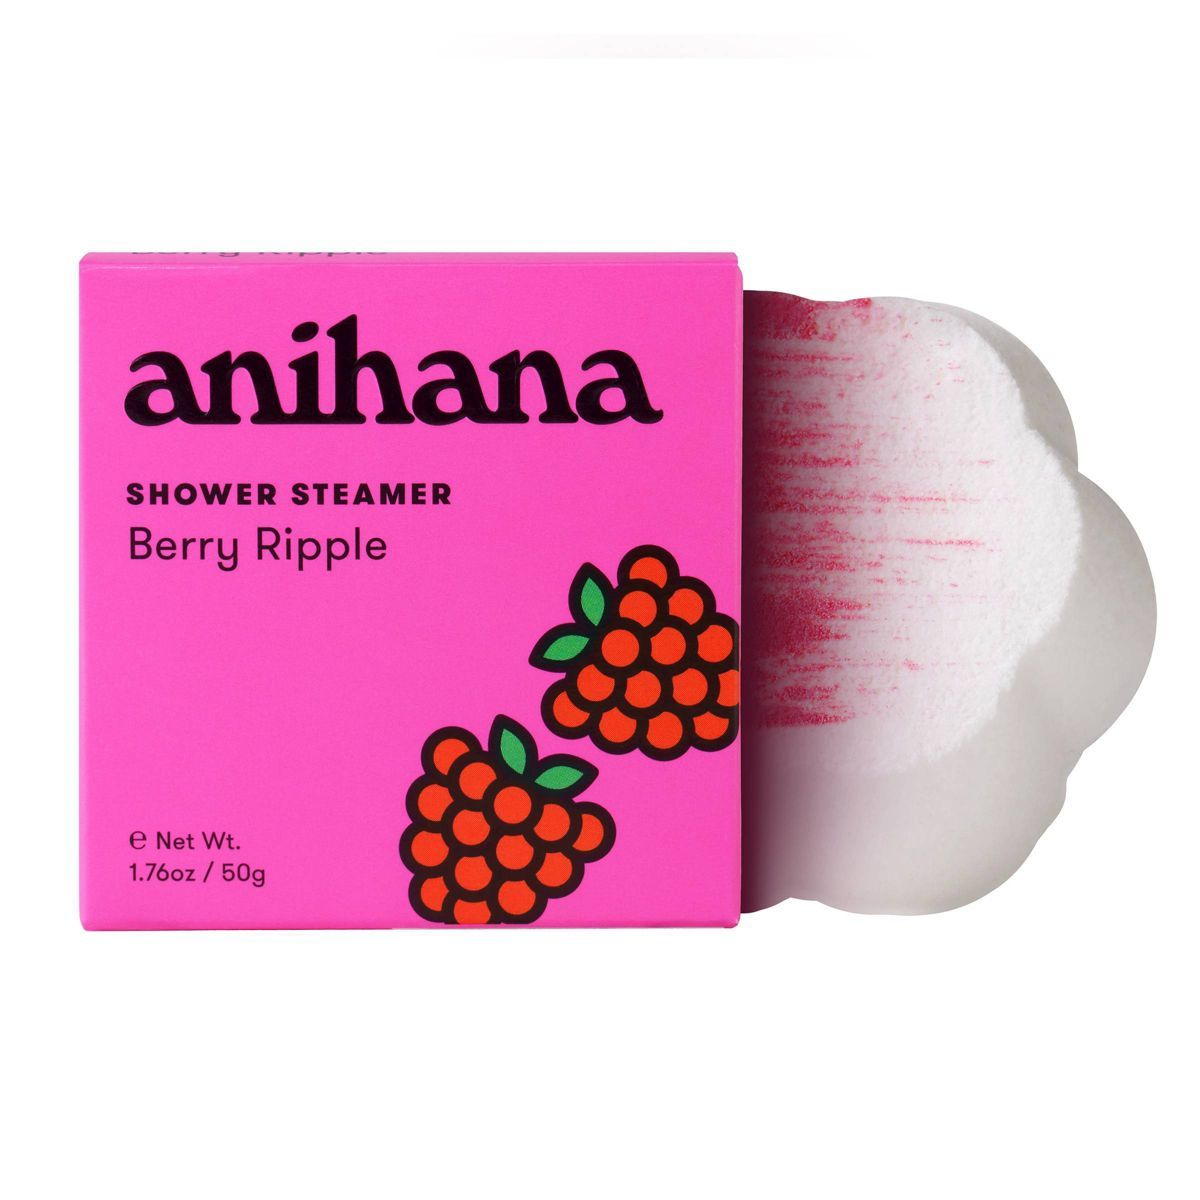 anihana Shower Steamer - Berry Ripple - 1.76oz | Target